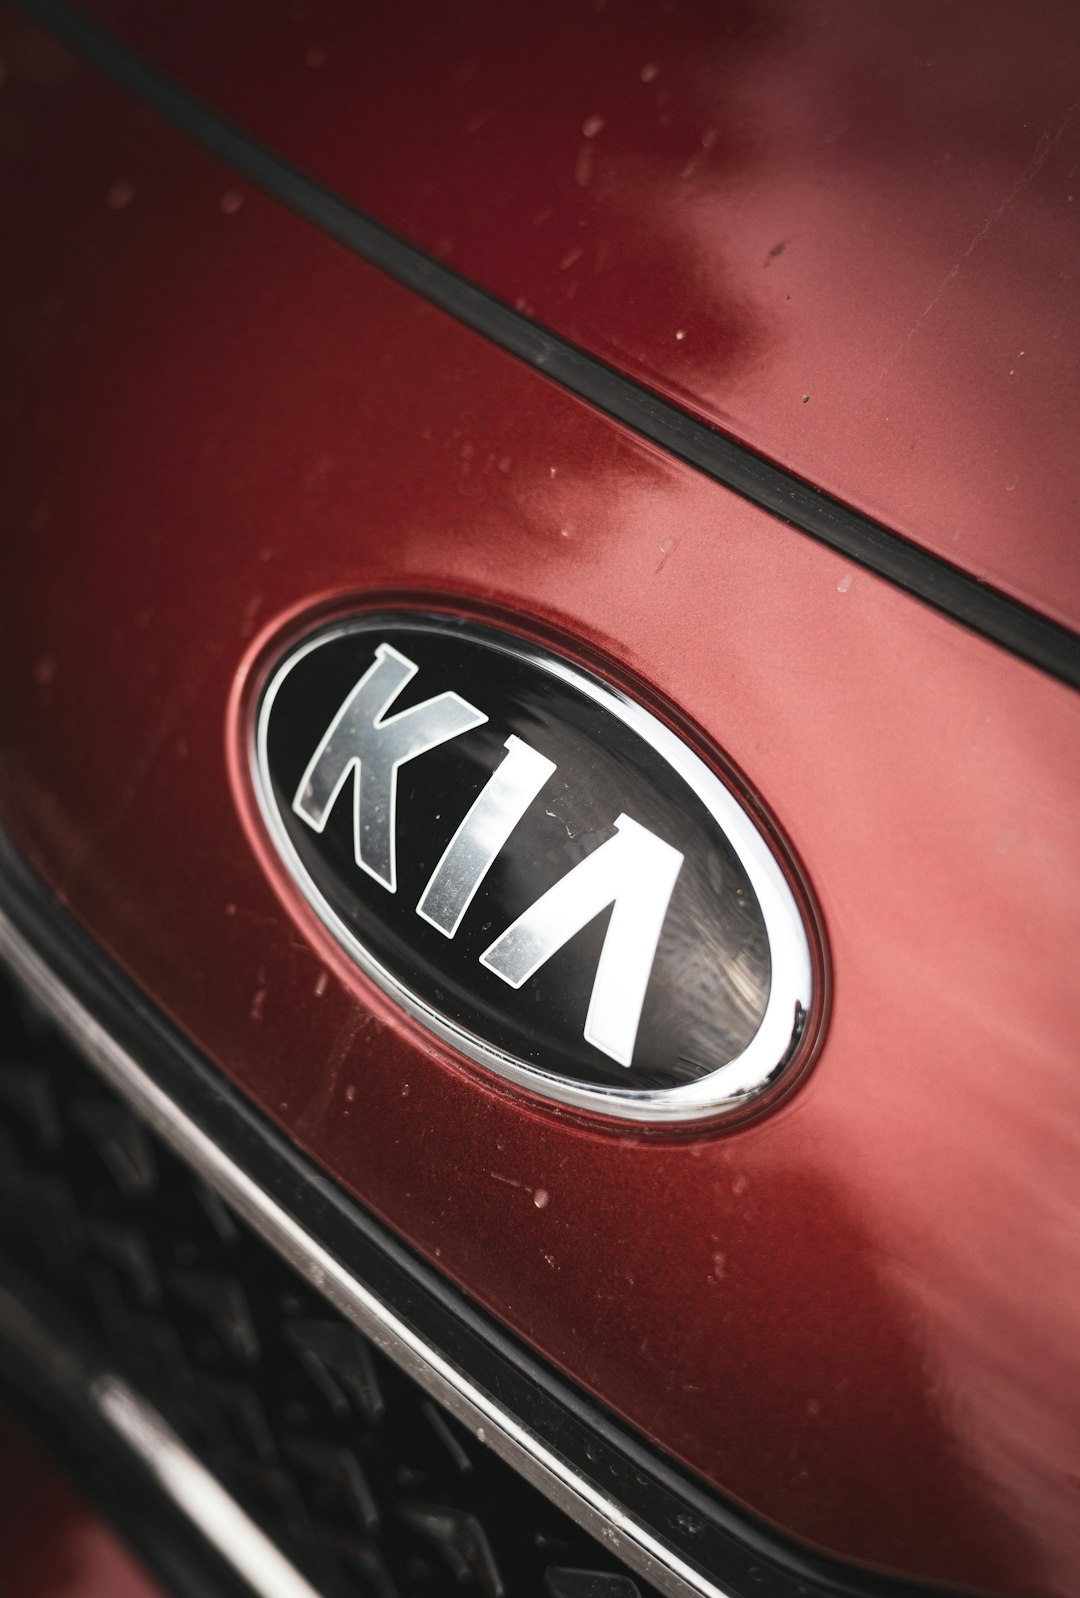 The Kia Sorento is a versatile and spacious SUV with a sleek design and impressive performance.